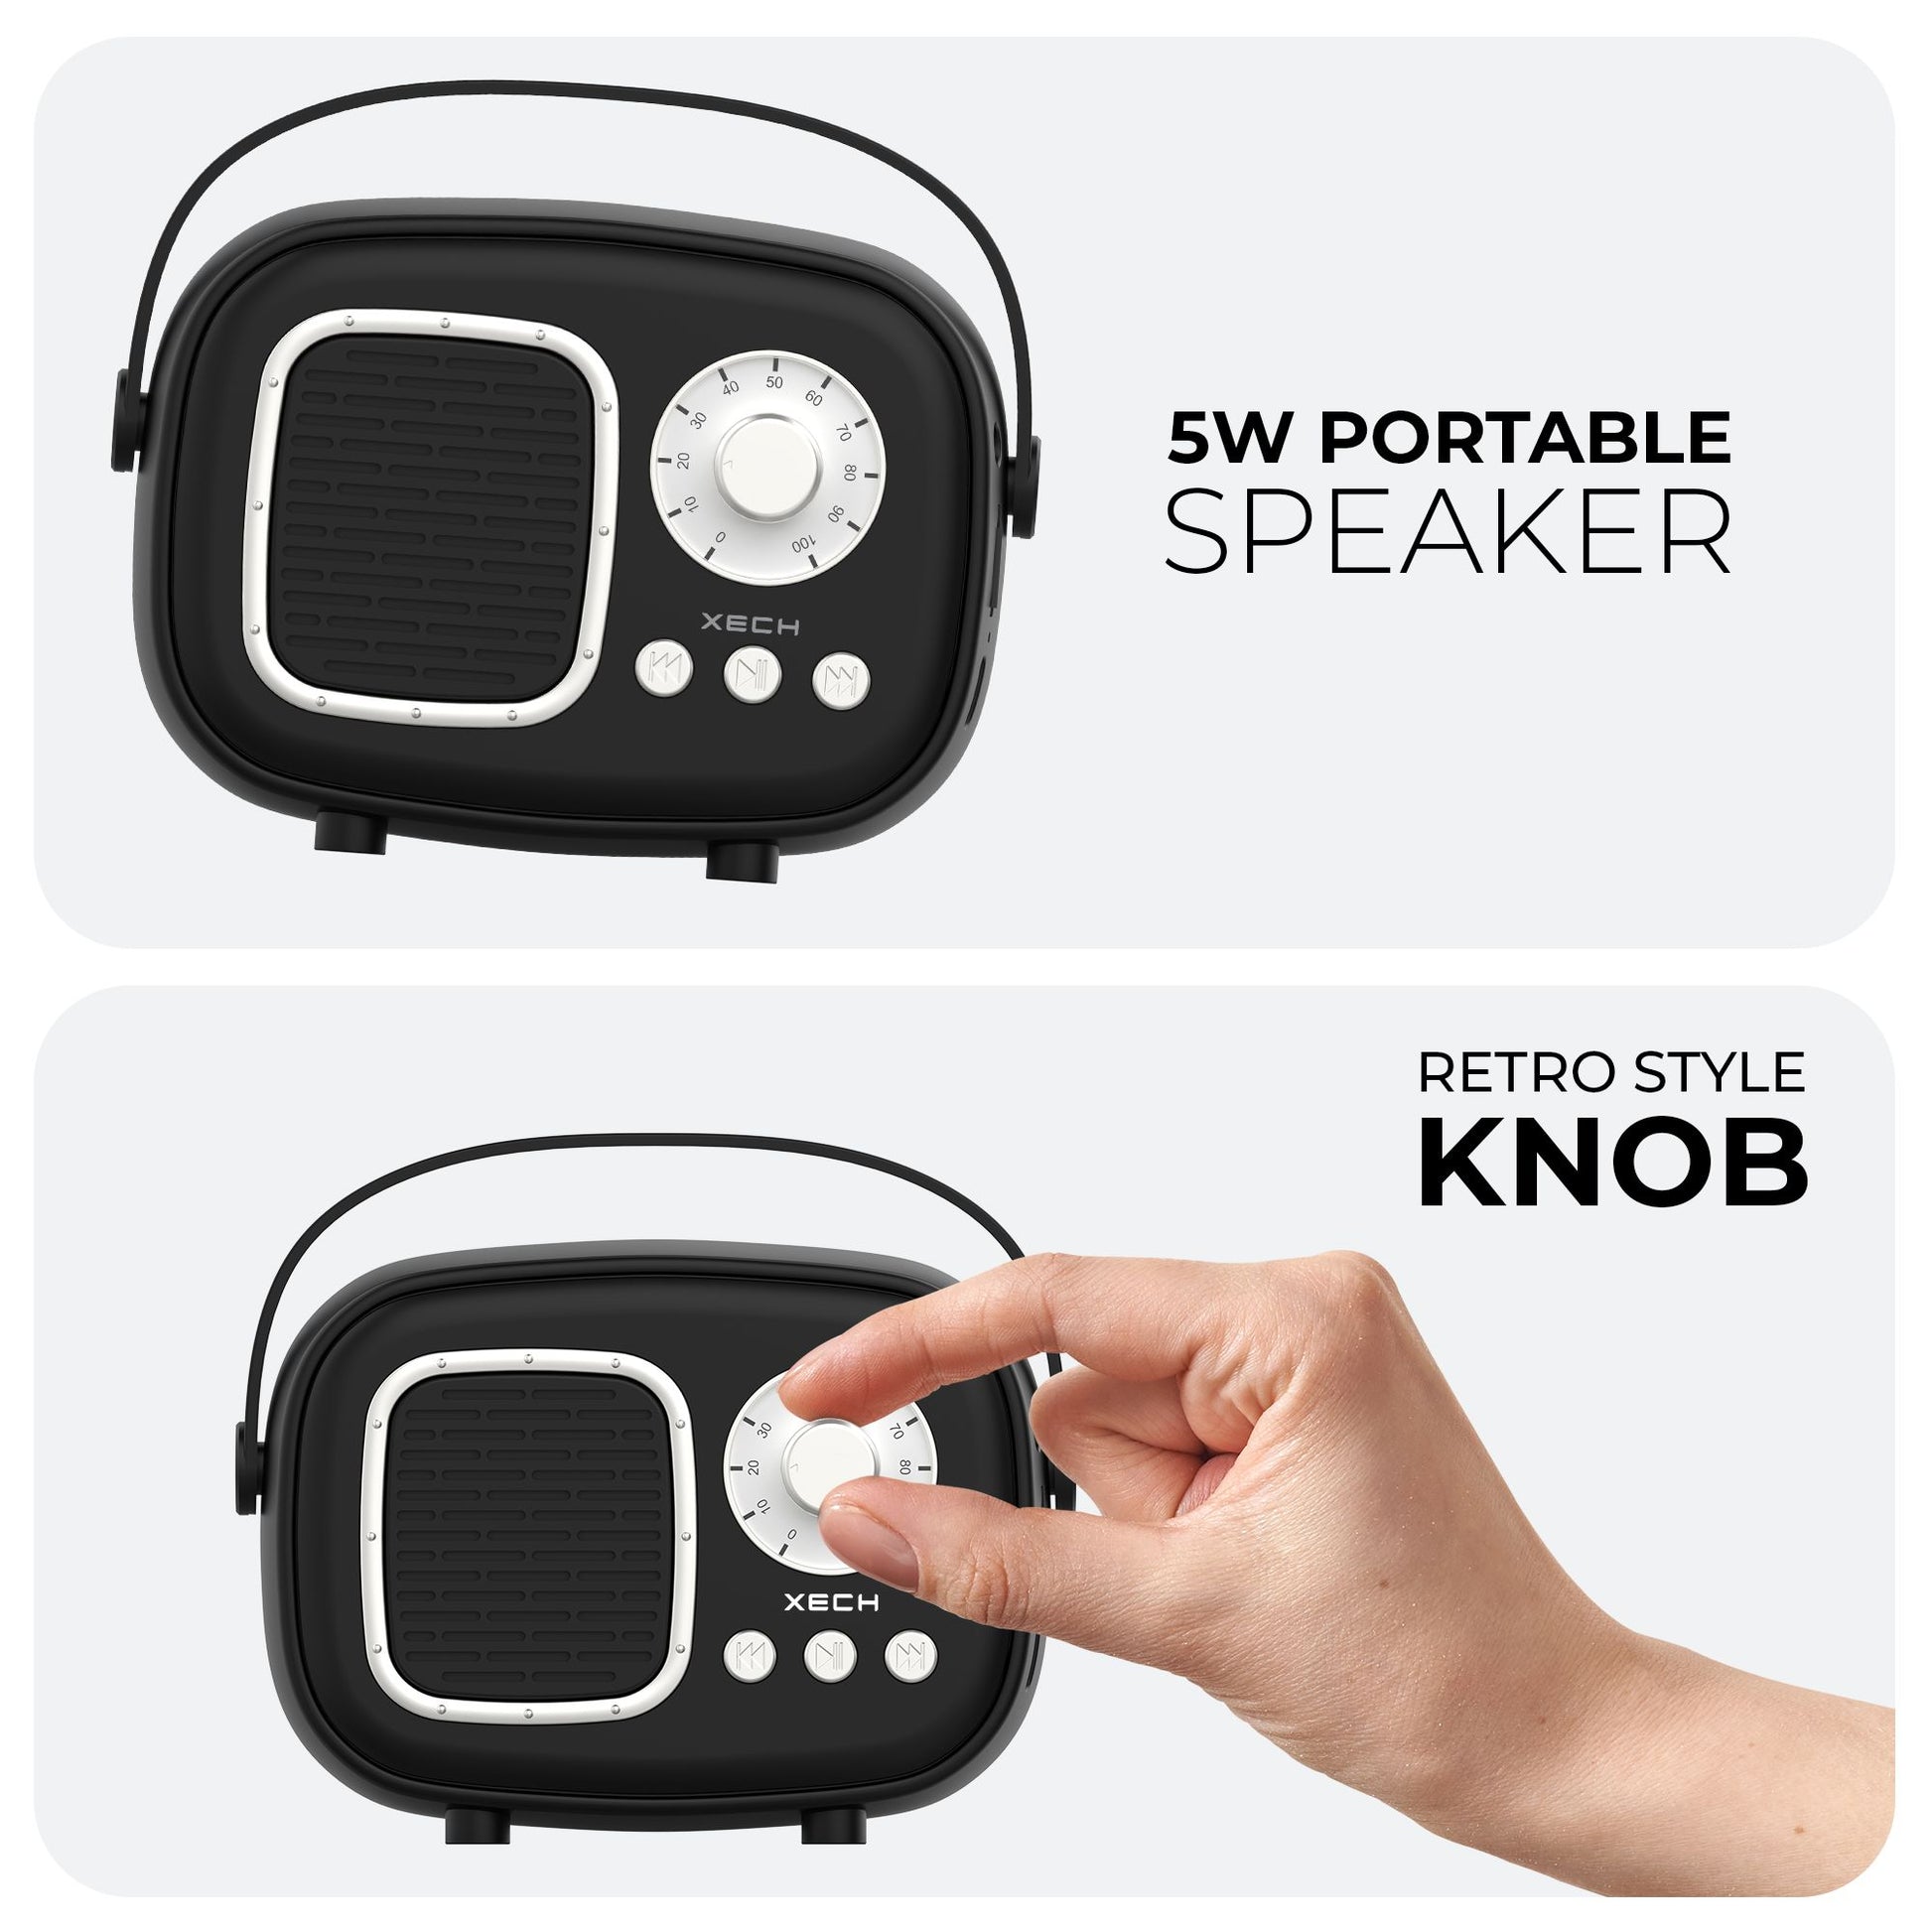 XECH Portable mini speaker with vintage design RetroJam